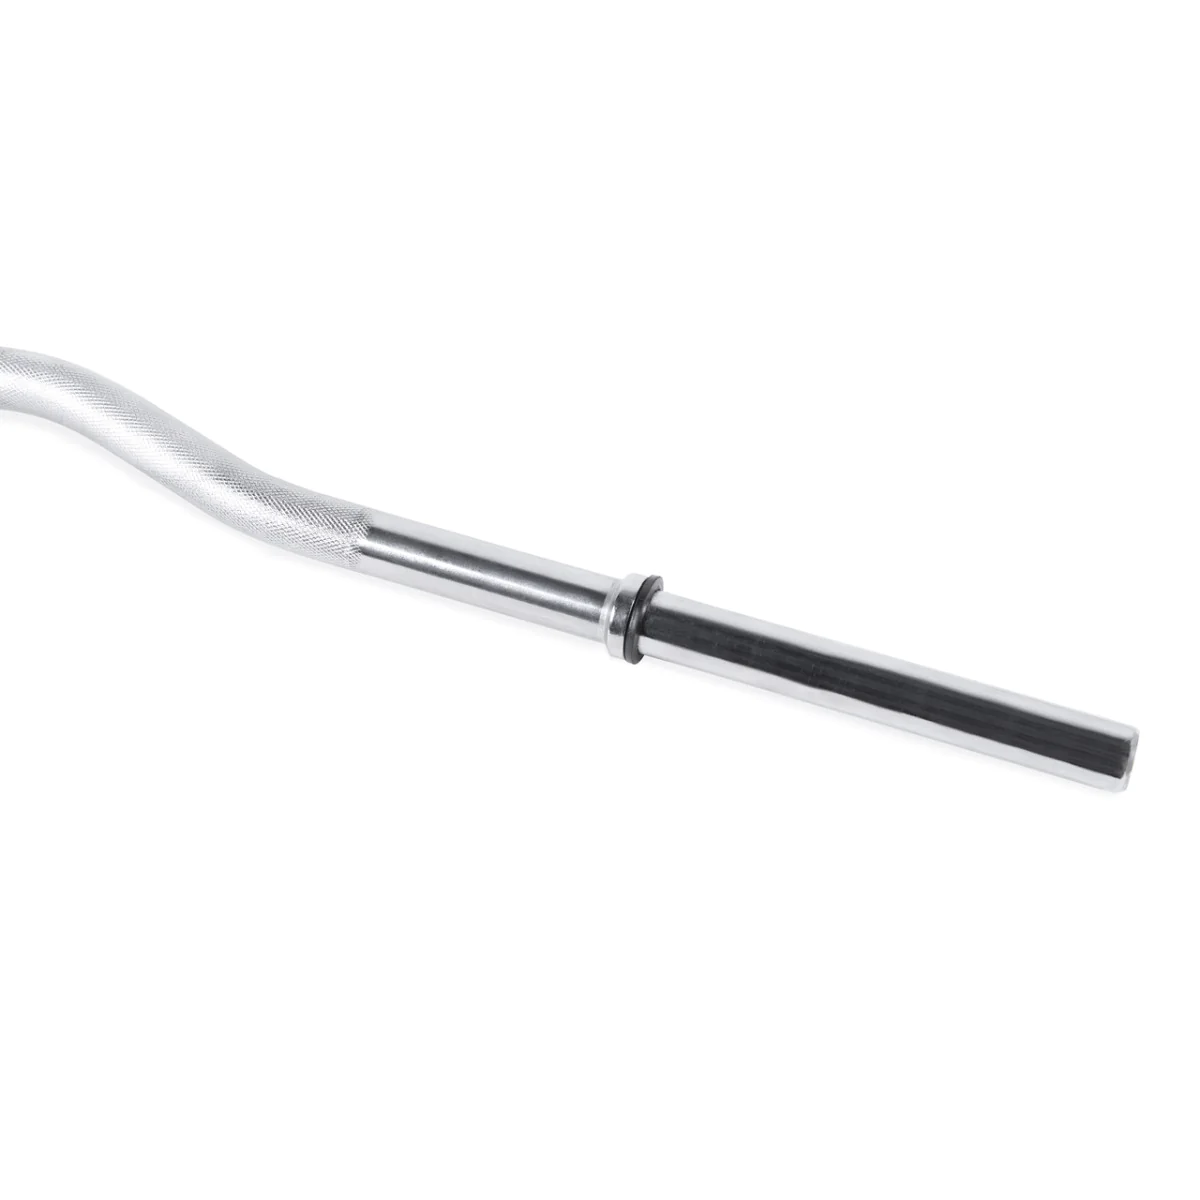 11 lb Barbell E Z Bar NEW CAP 1” Standard Curl bar 47" 47 inches long